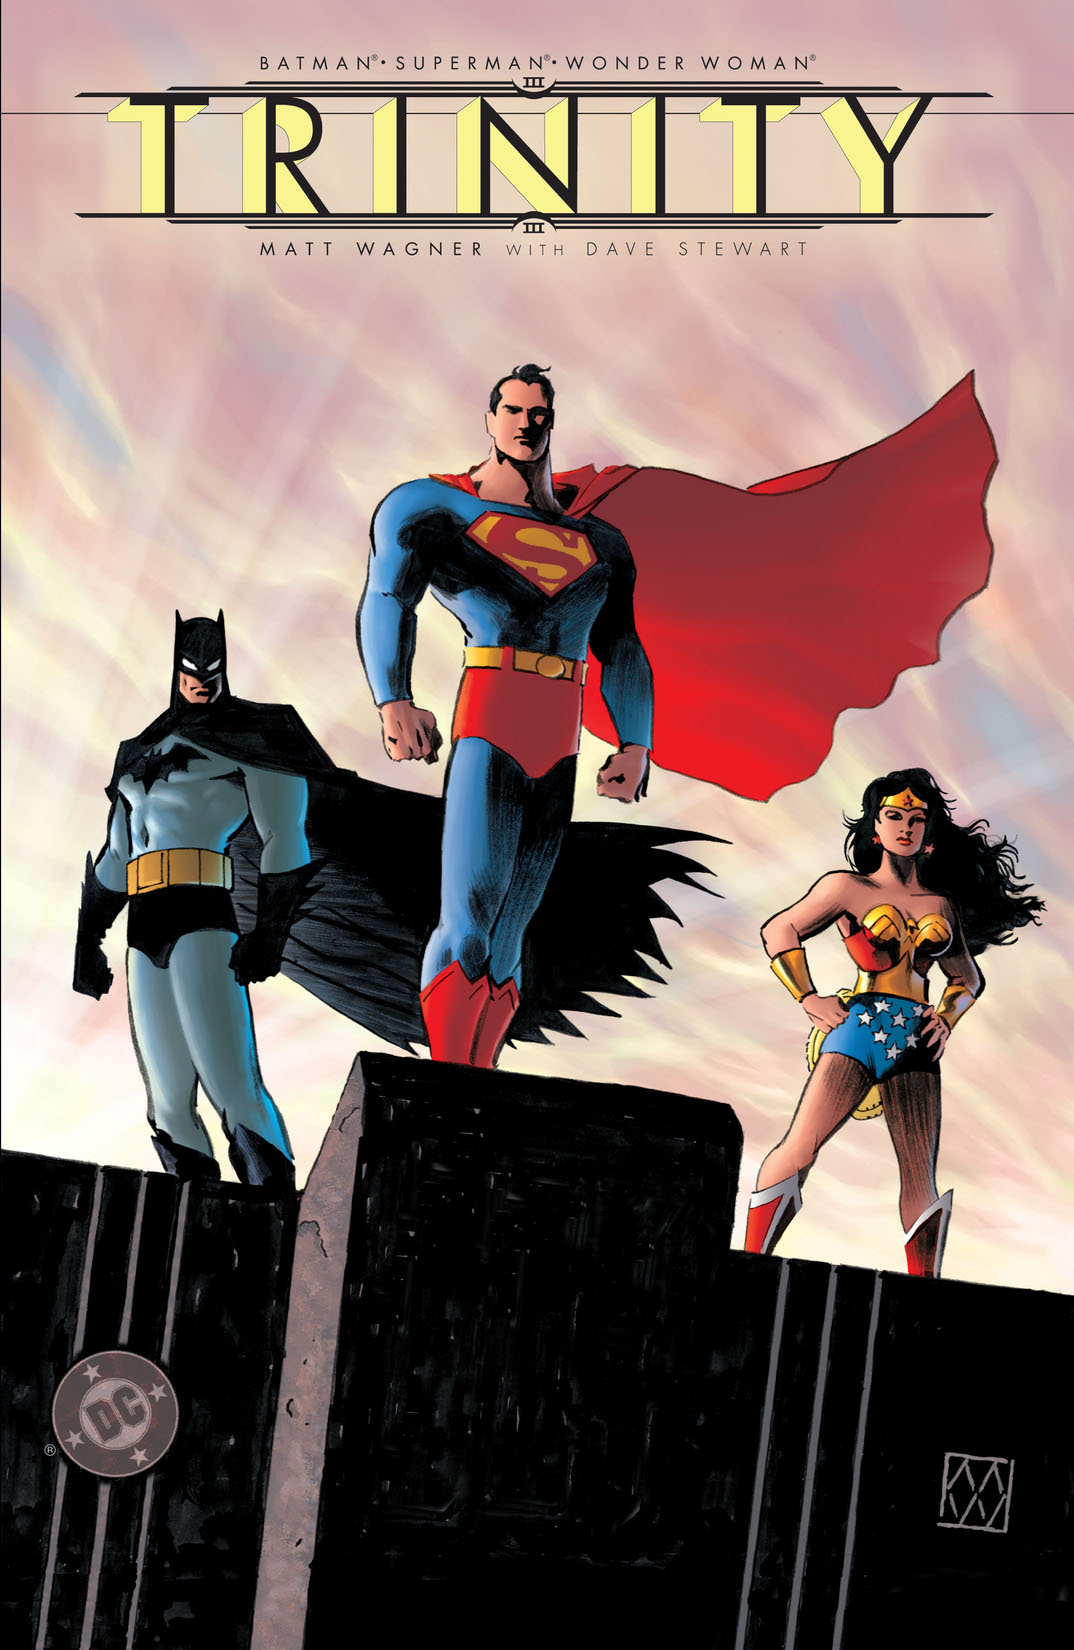 Batman Superman Wonder Woman: Trinity #1 preview images